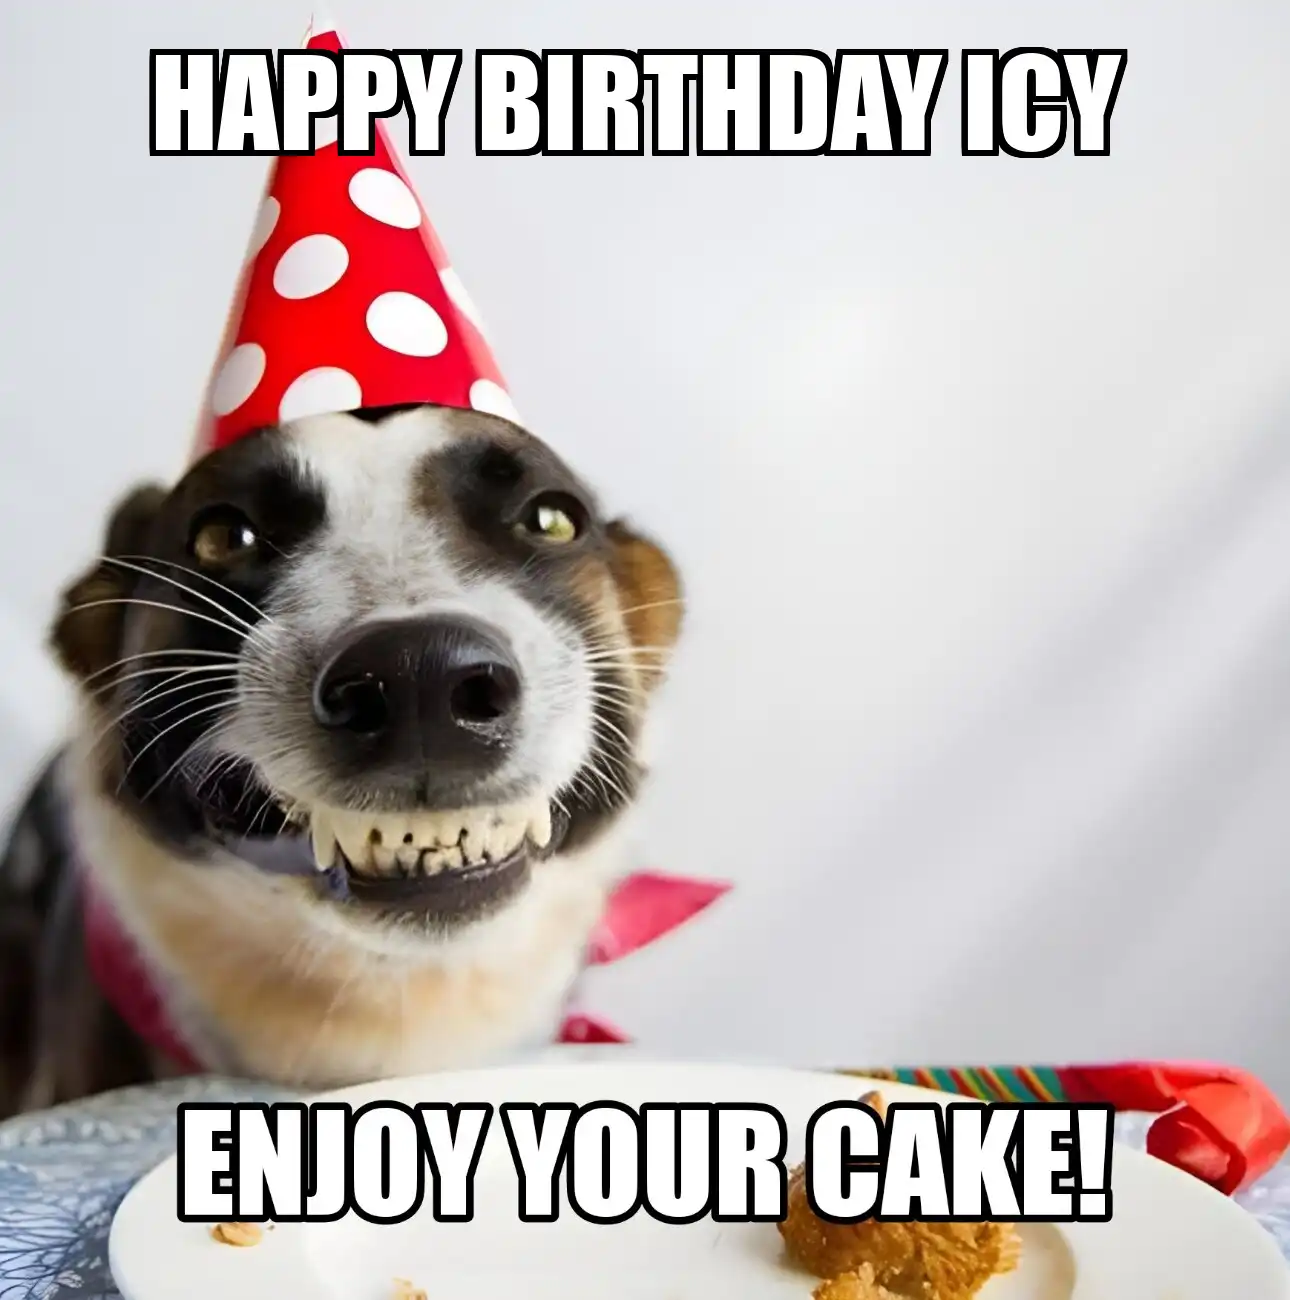 Happy Birthday Icy Enjoy Your Cake Dog Meme